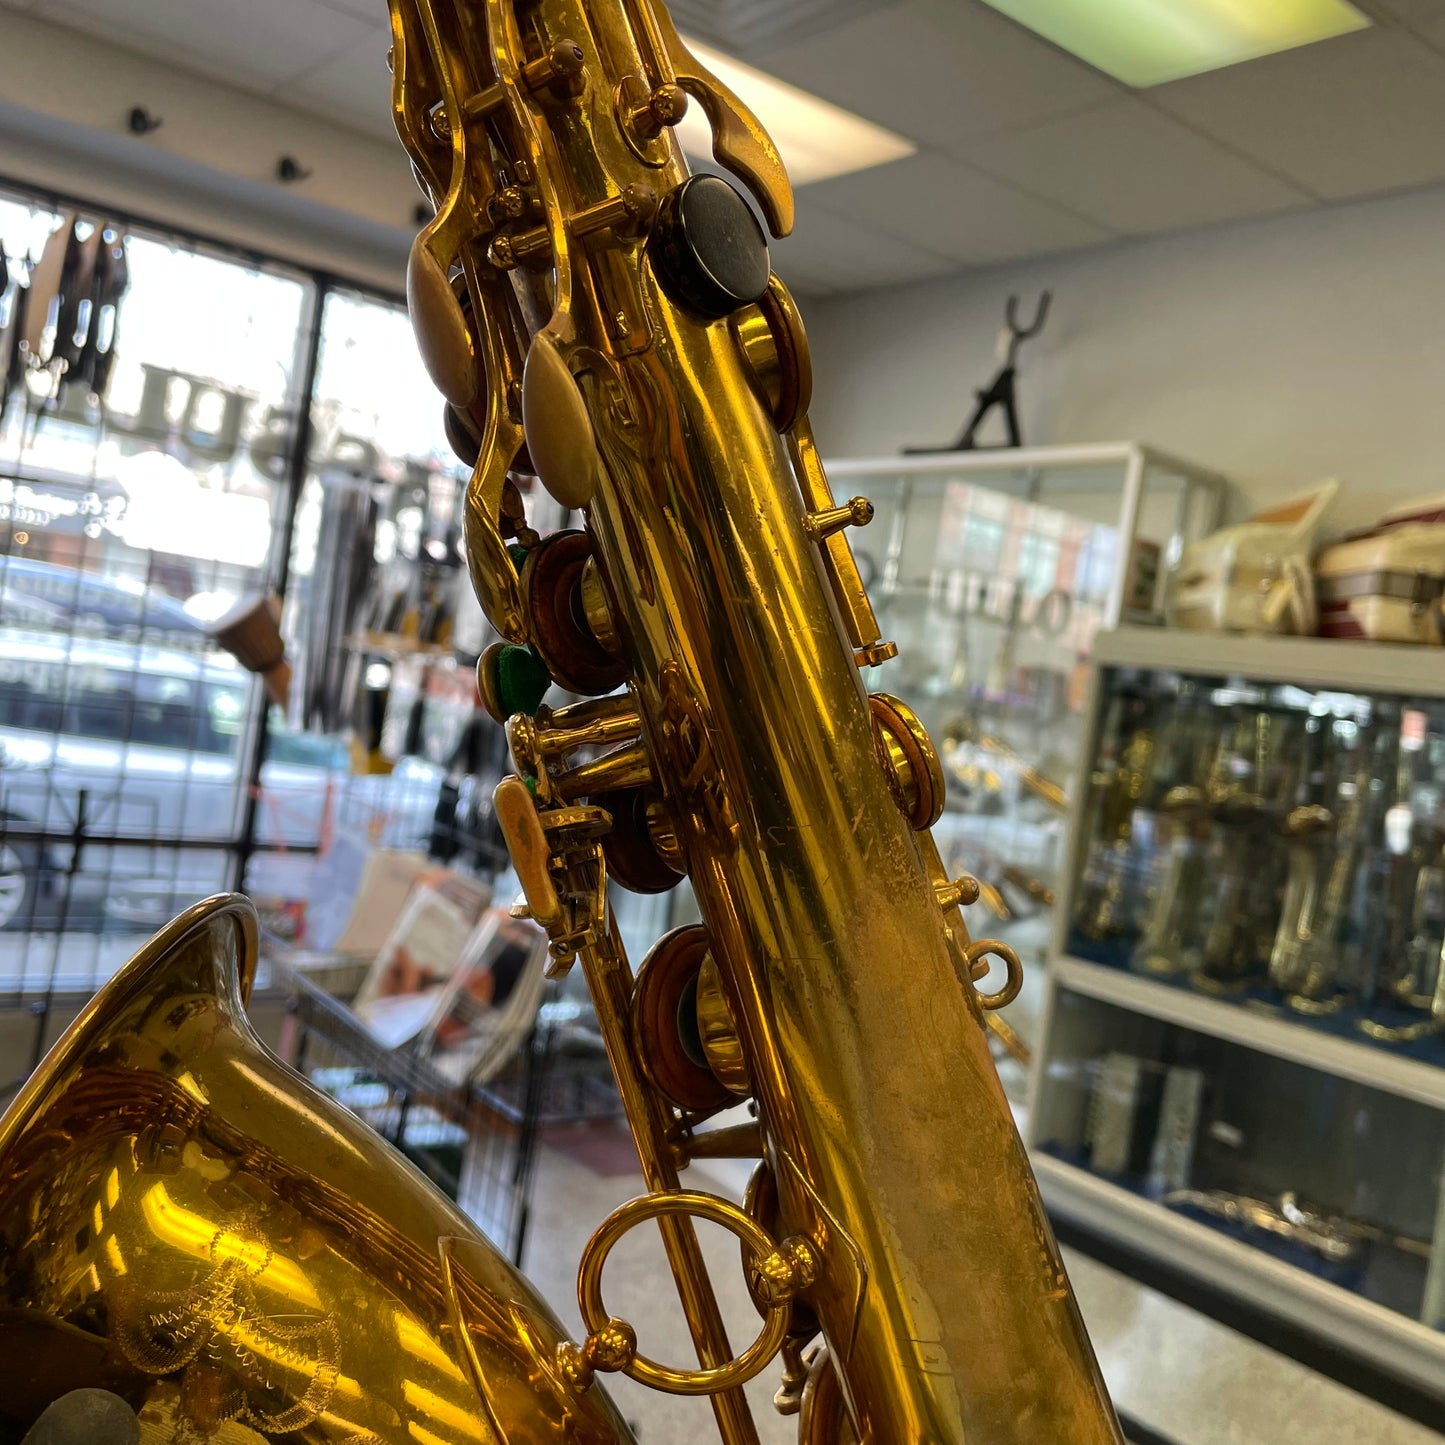 Selmer Mark VI Tenor Saxophone